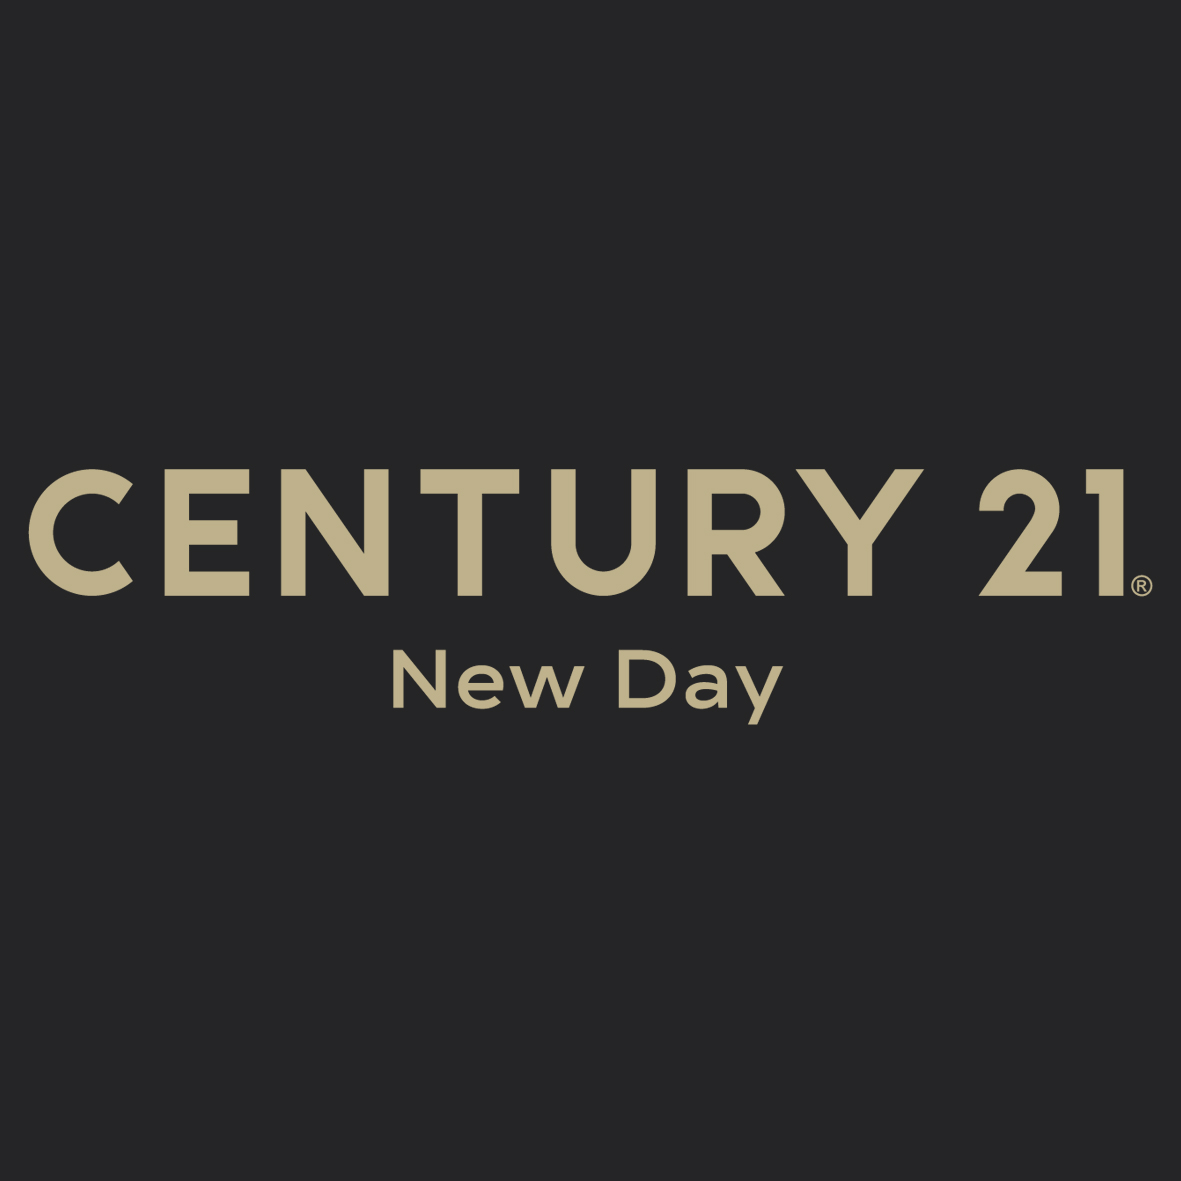 CENTURY 21 New Day